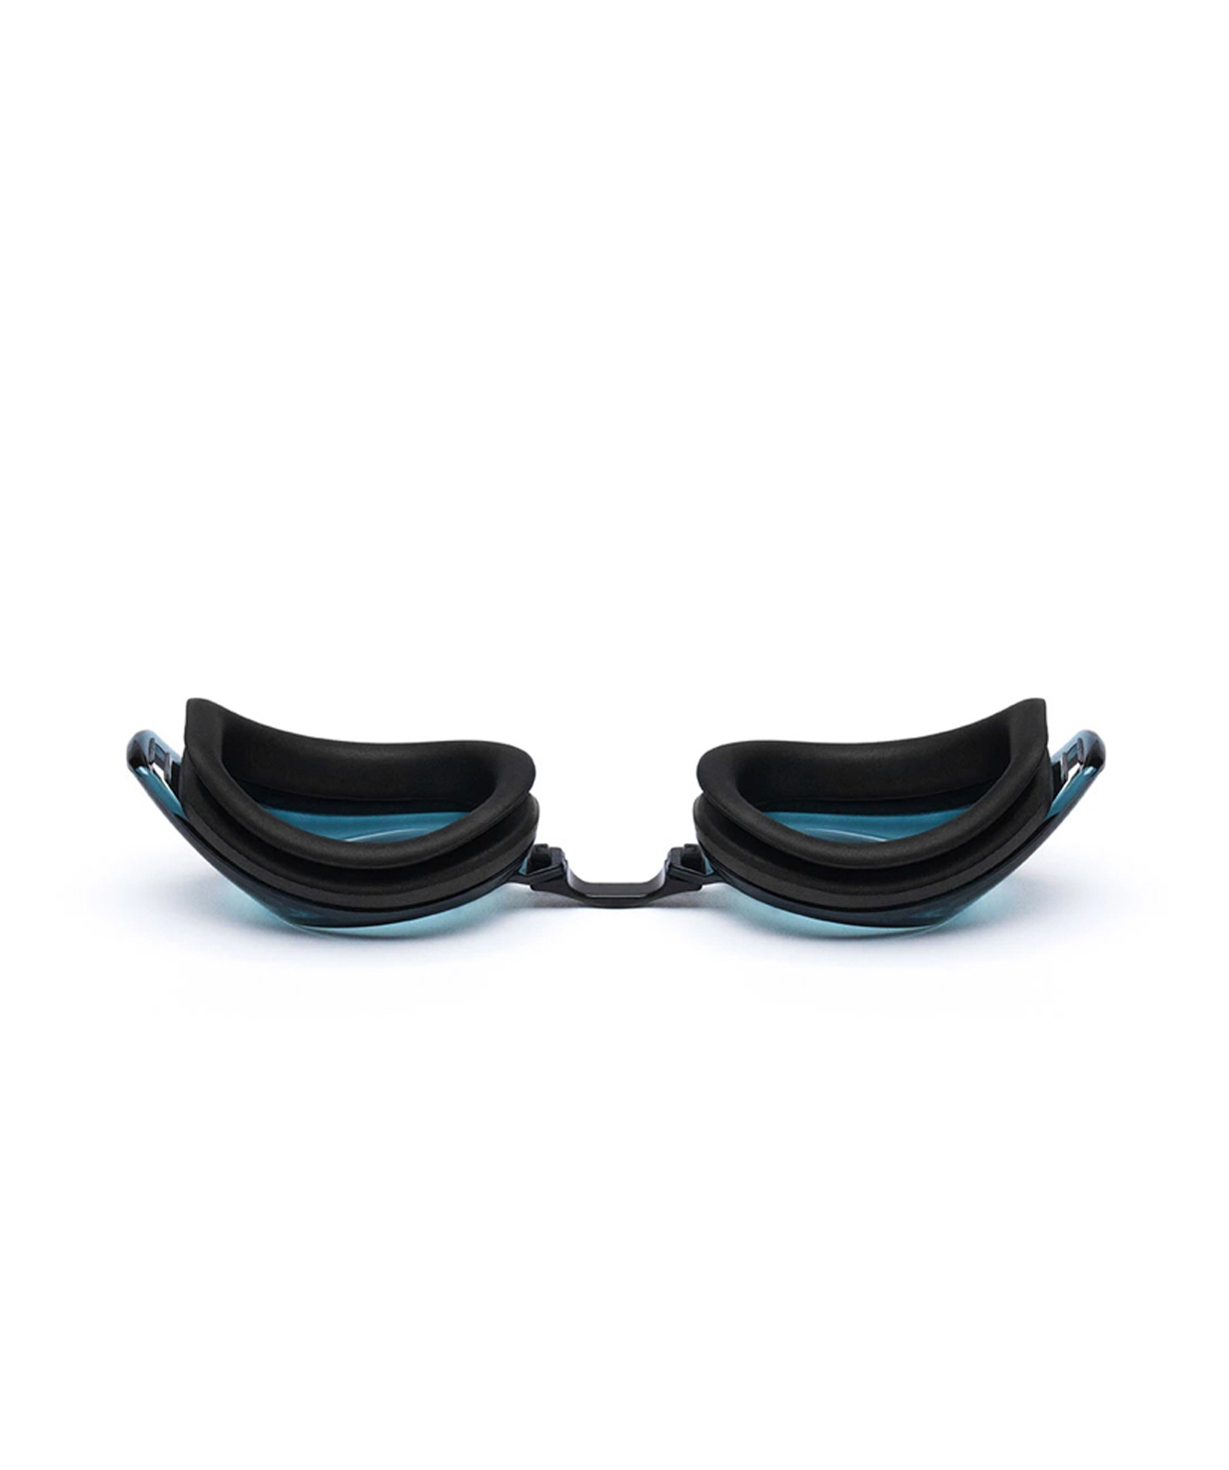 Очки `Xiaomi Turok Steinhardt TS` для плавания для взрослых